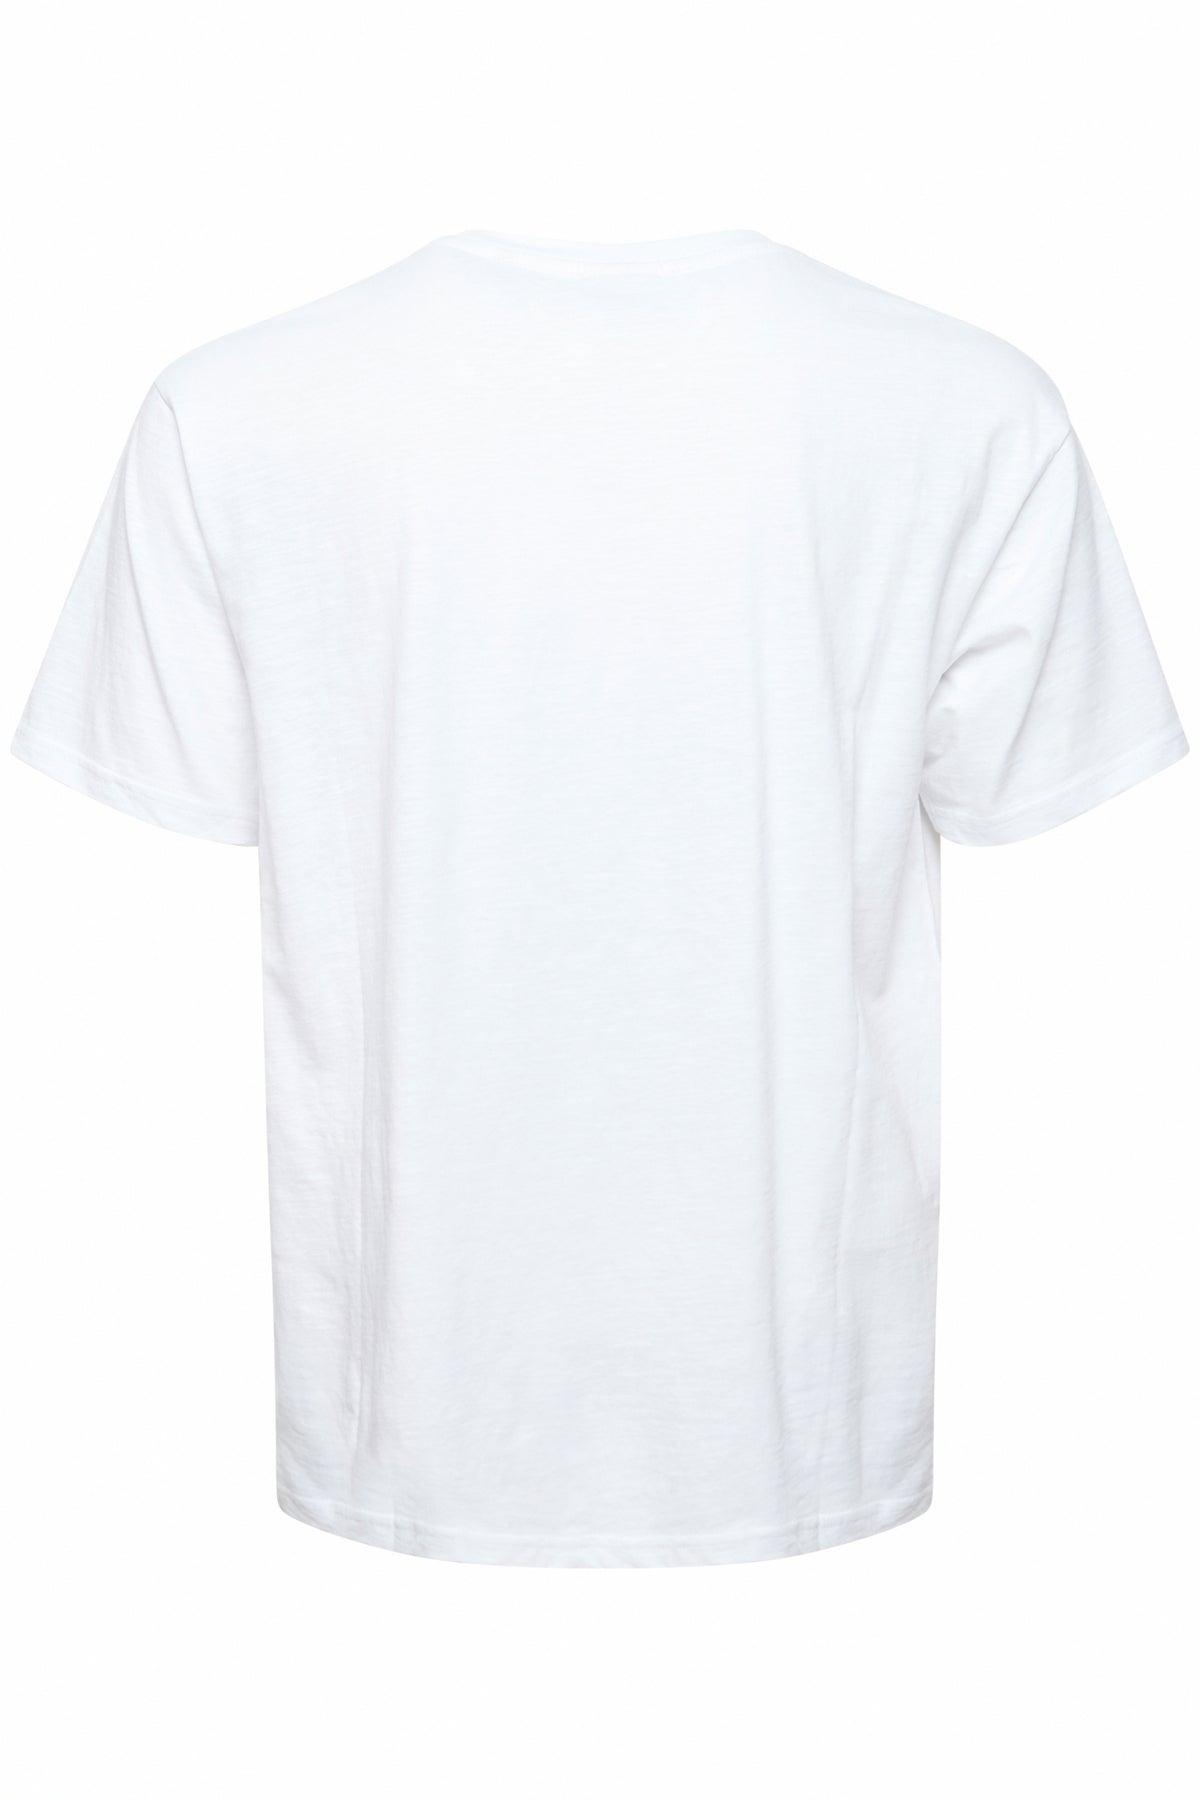 Camiseta !Solid Finlee Bright White - ECRU